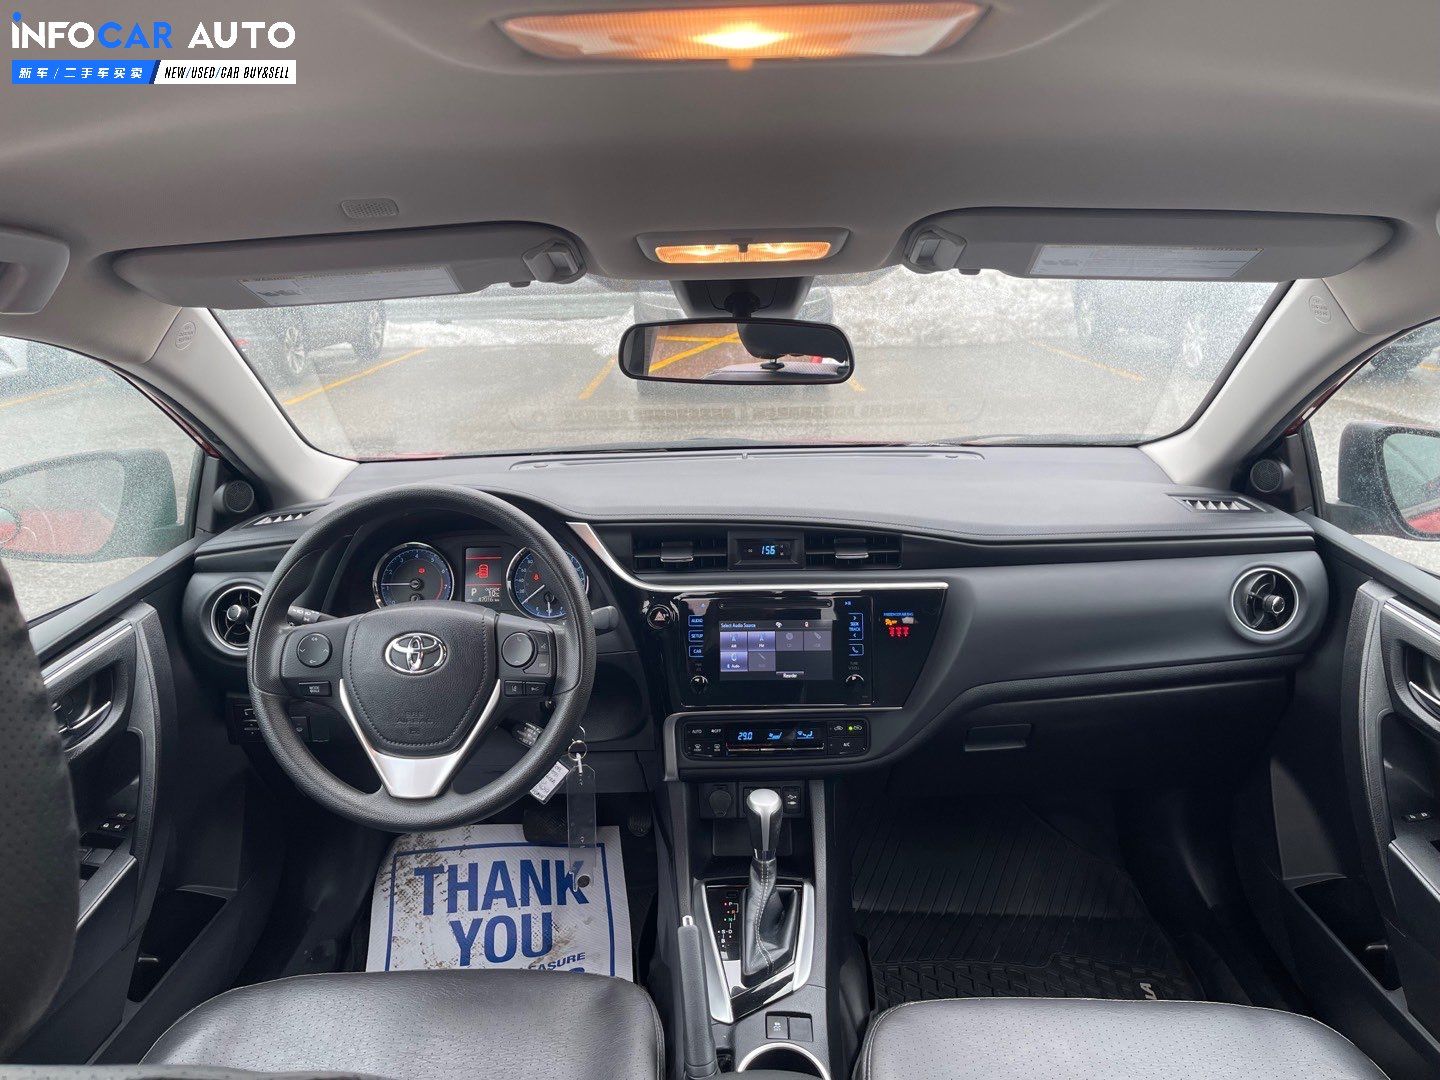 2019 Toyota Corolla LE - INFOCAR - Toronto Auto Trading Platform